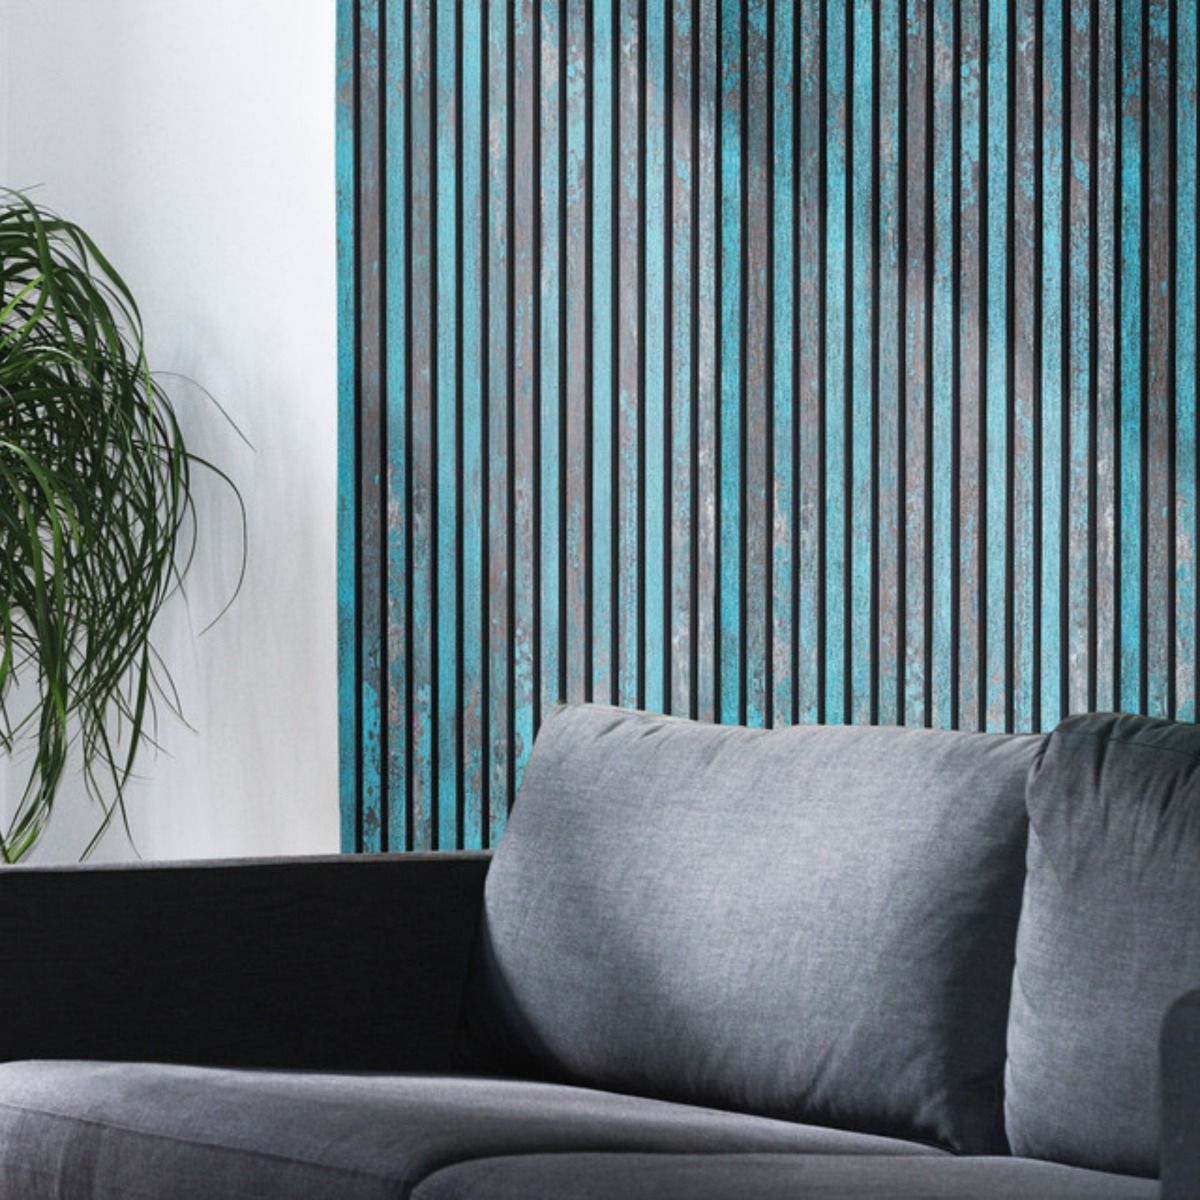 Panel acústico oxido azul de estilo vintage ➜ WoodUpp 